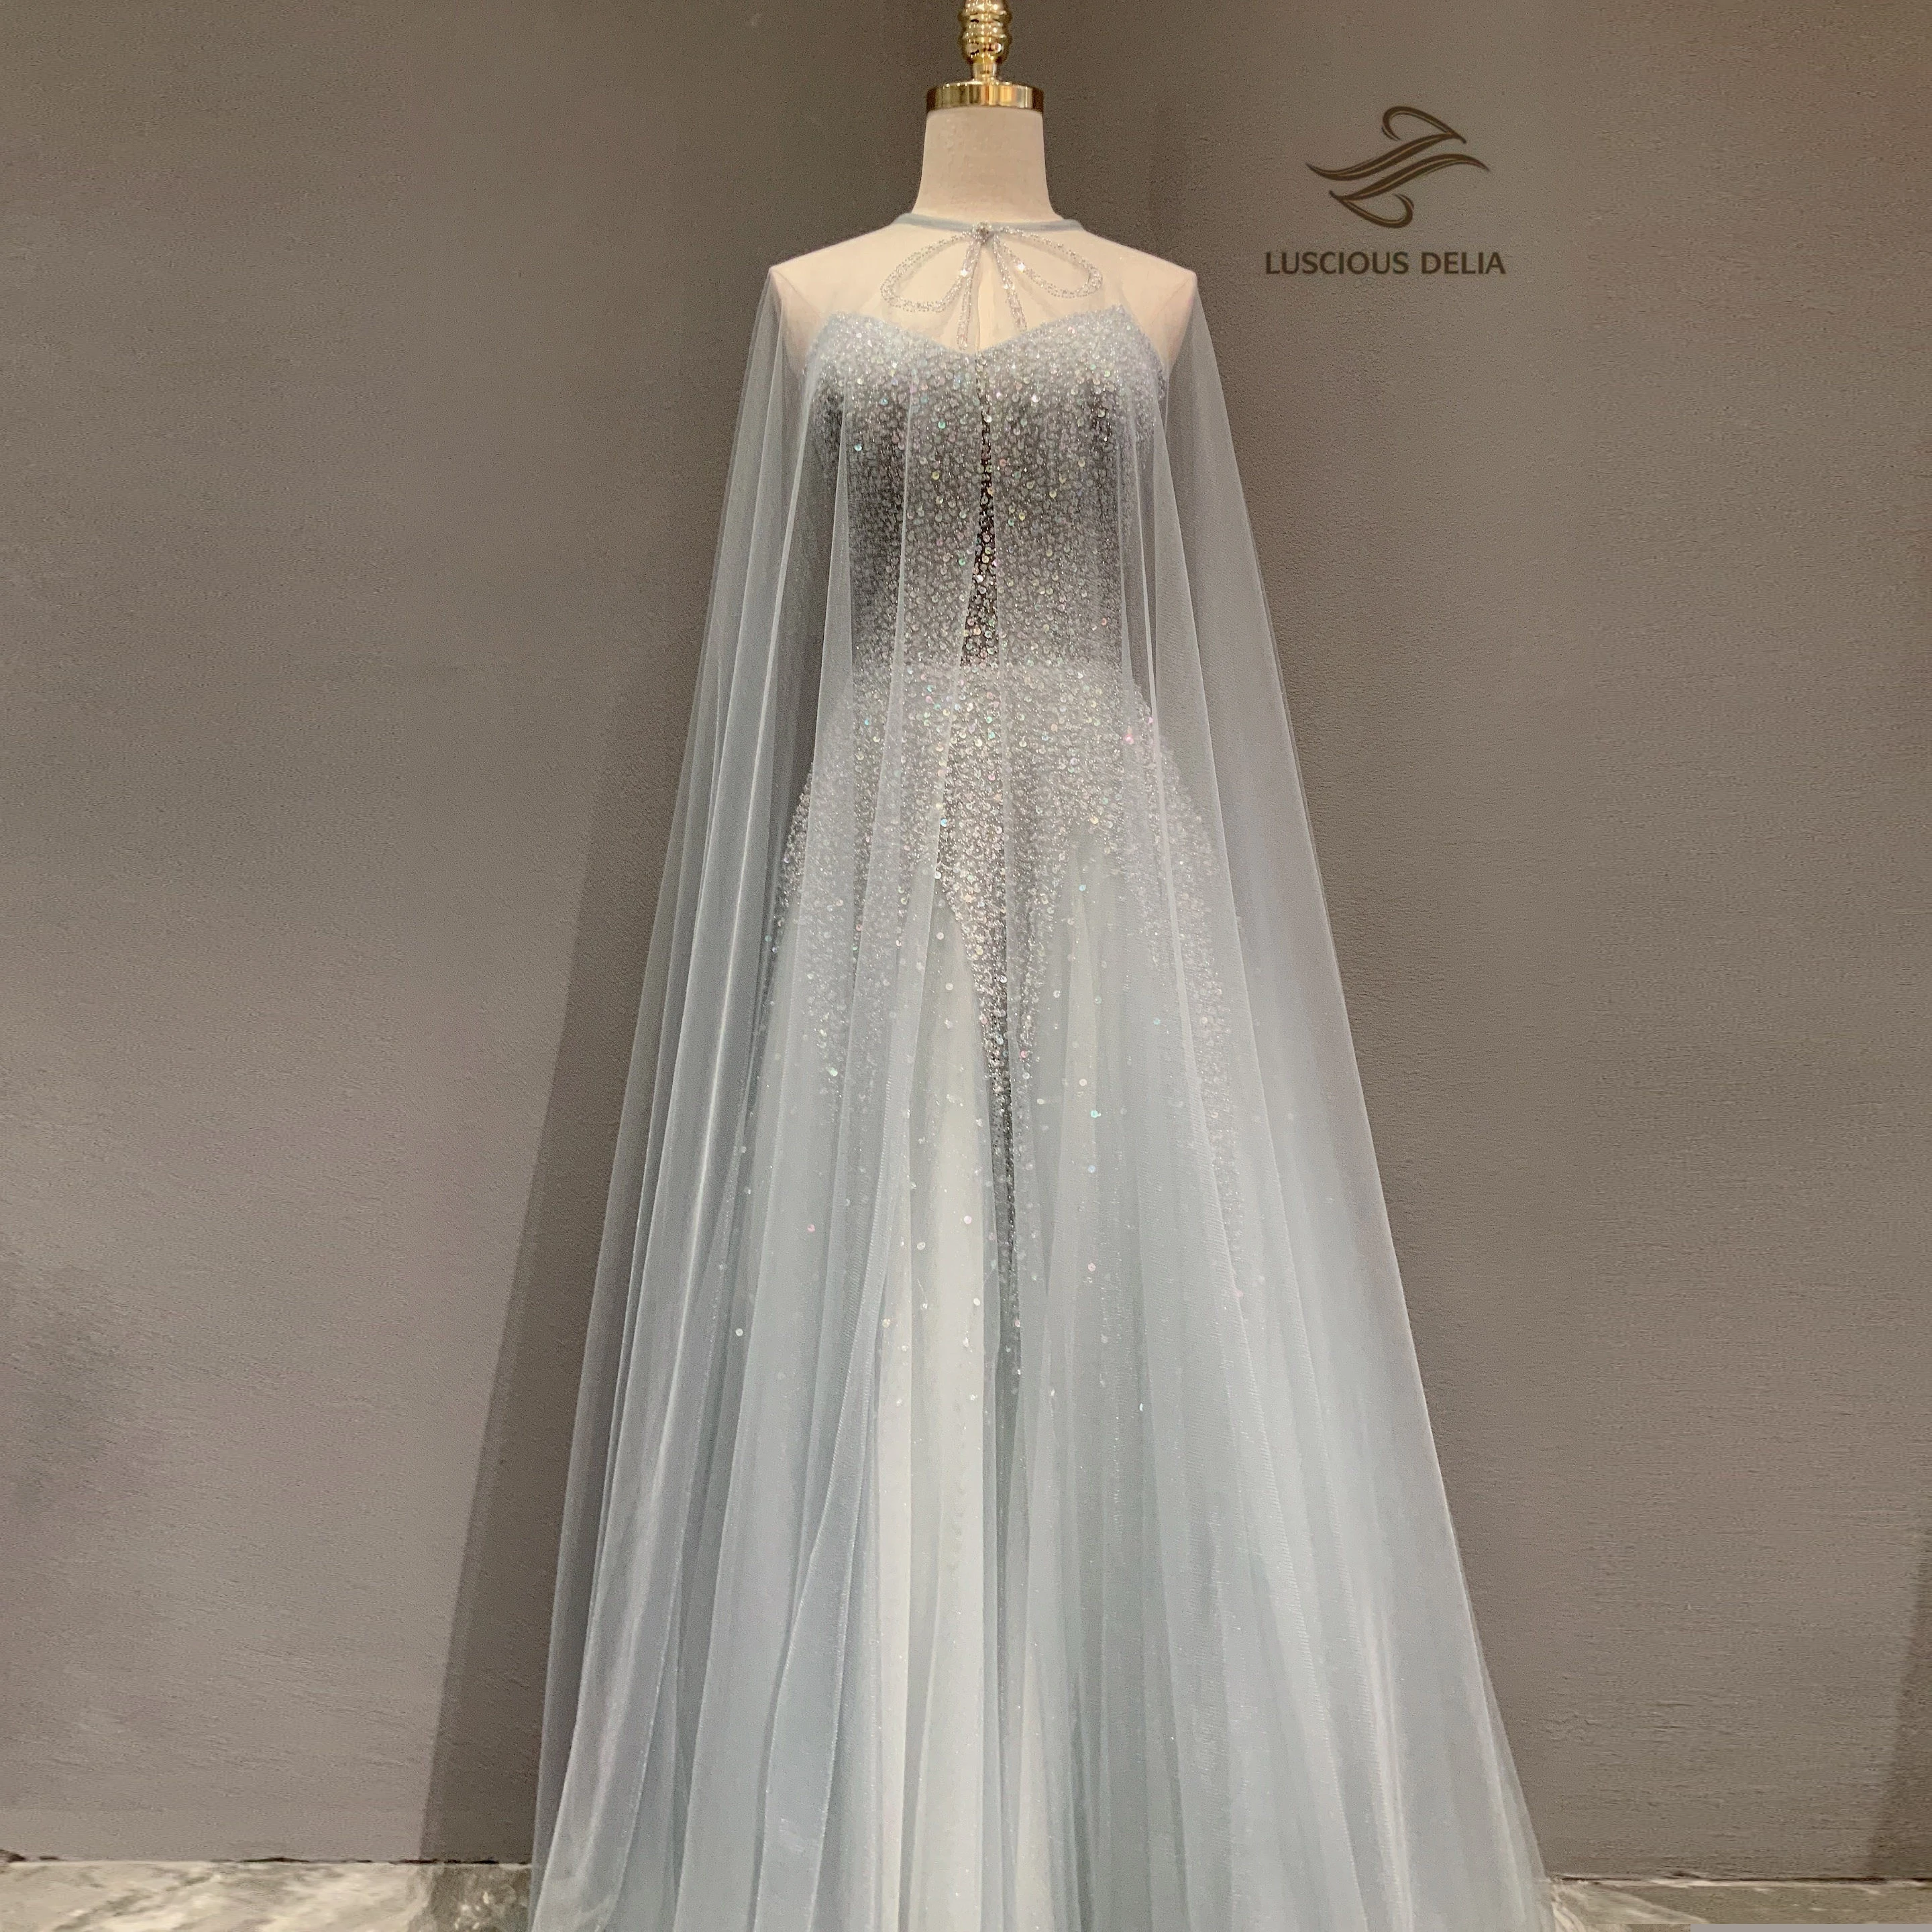 

Luxury High Split Tulle Sweep Cape Evening Dresses 2021 Beading Pretty Elegant A Line Dress Luscious Delia